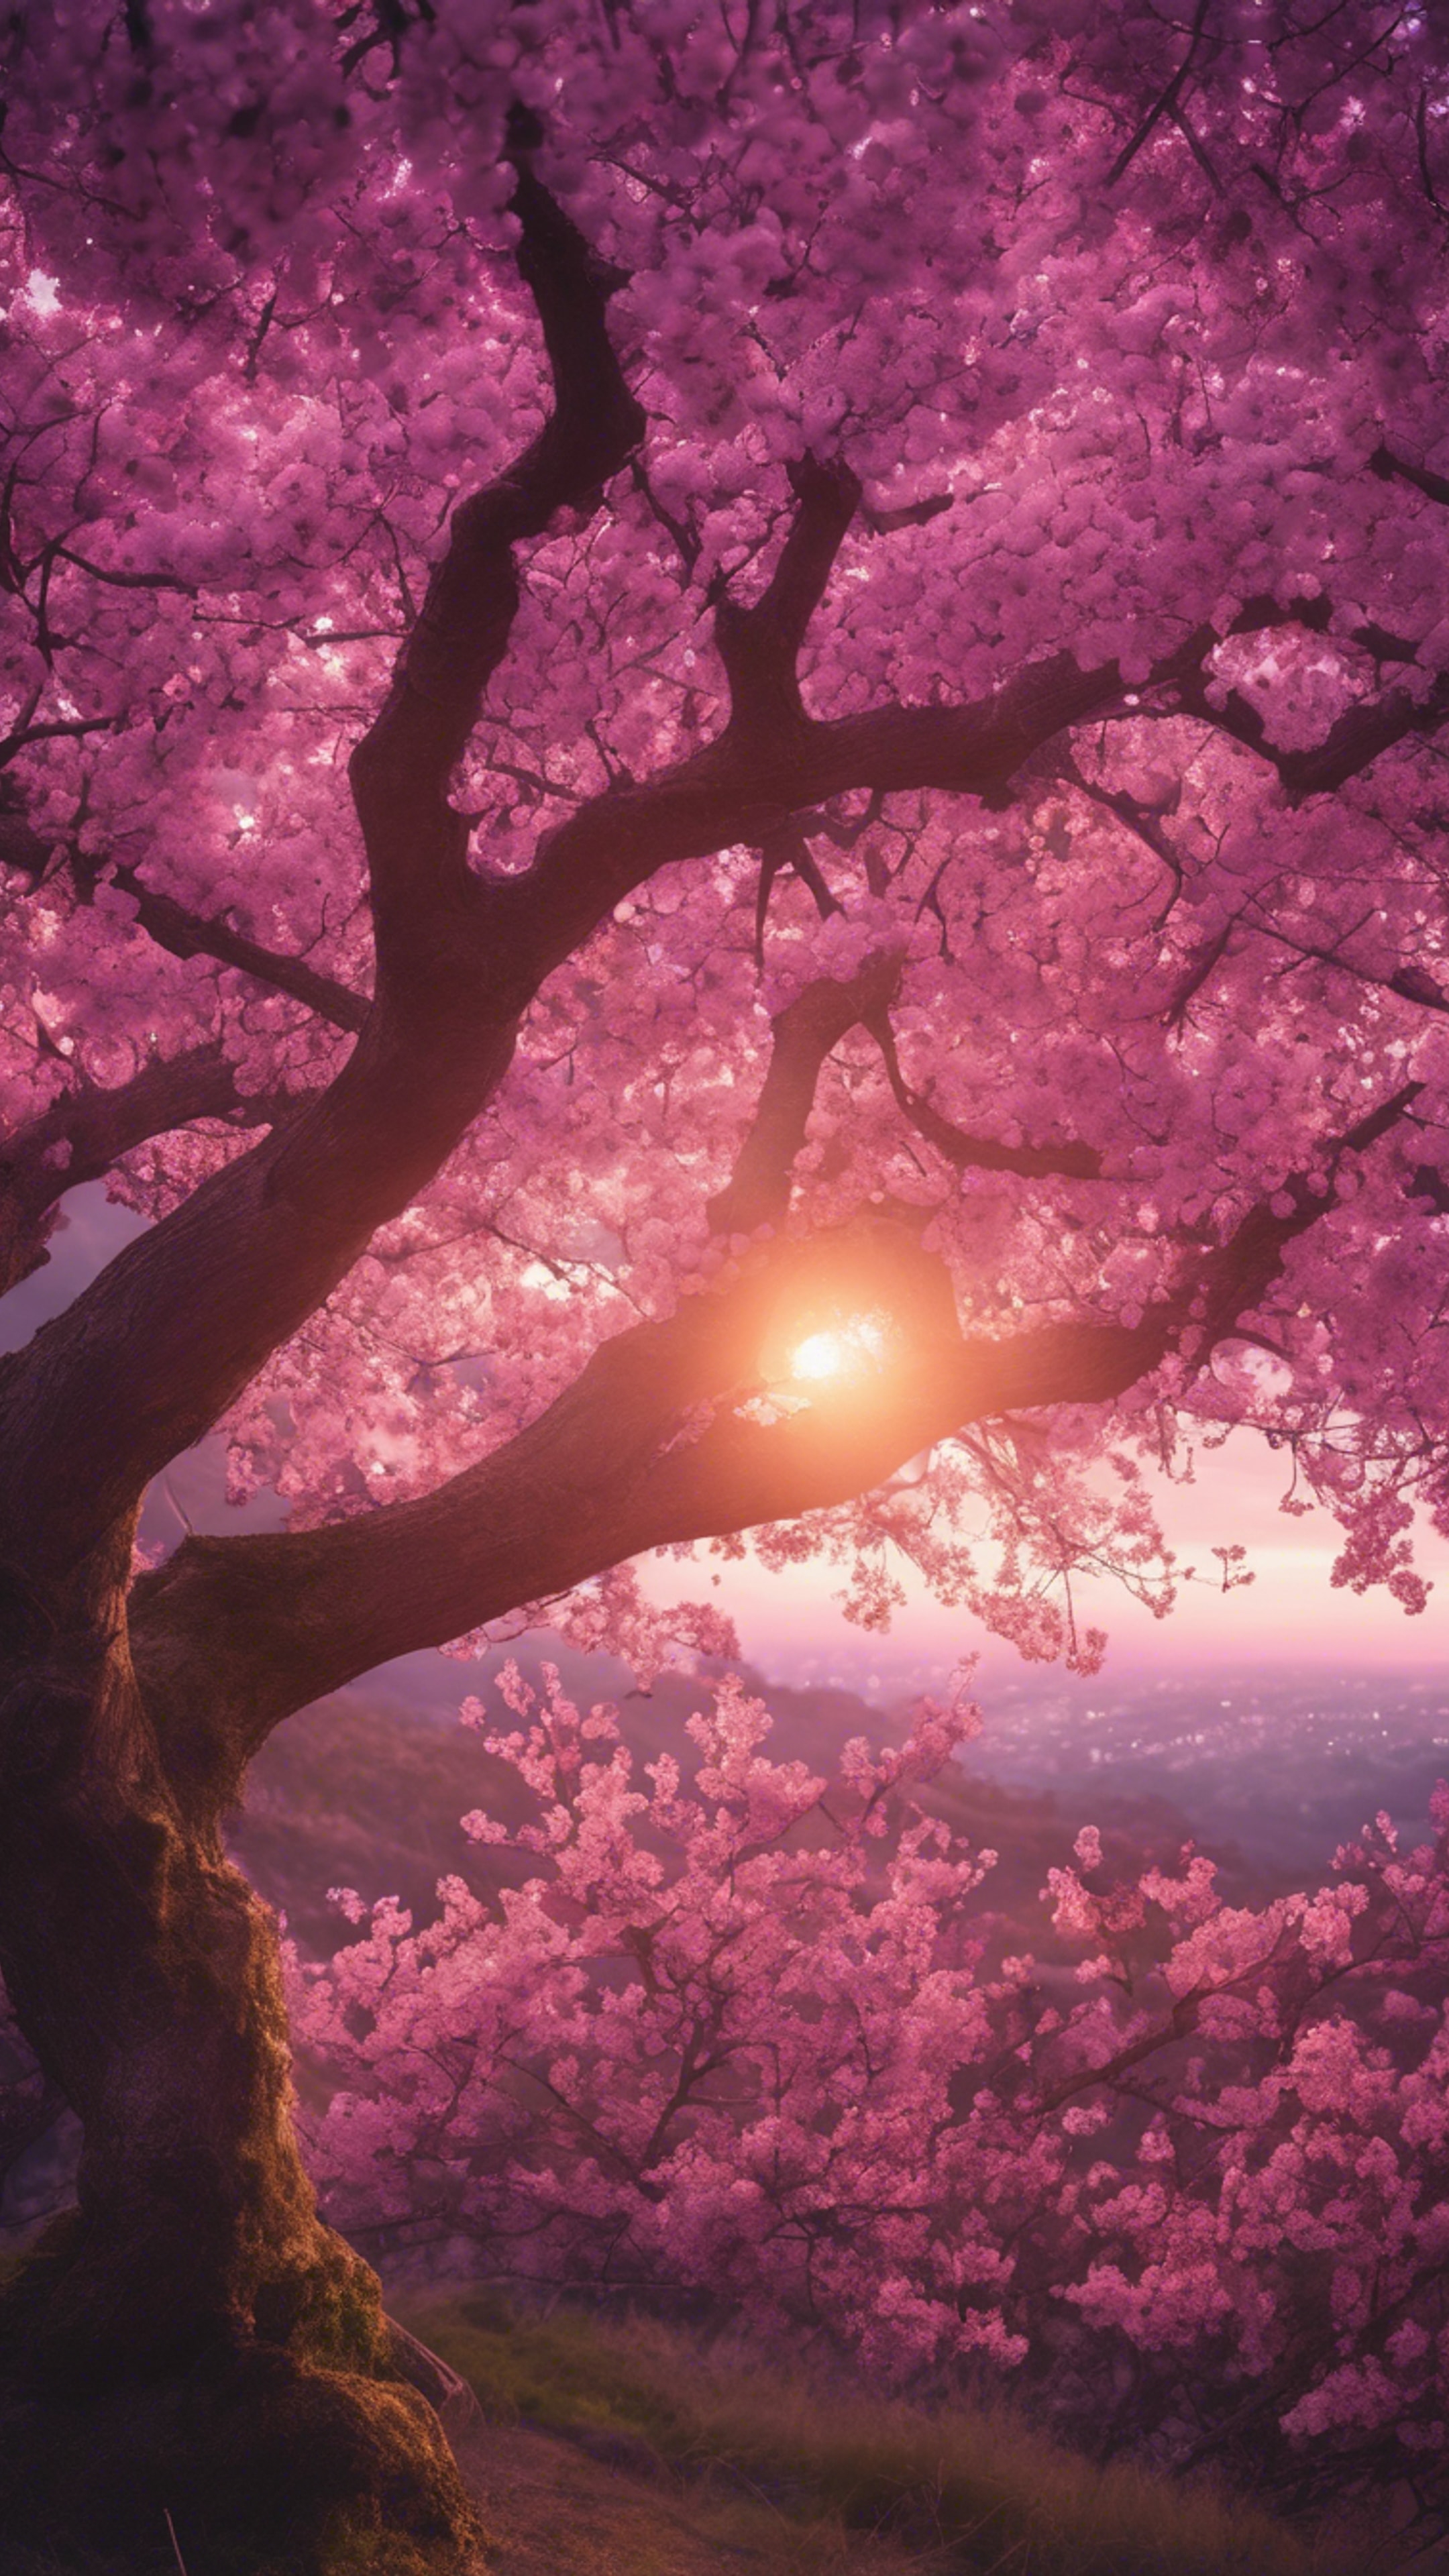 A lush pink blossom tree under a stunning purple sunset.壁紙[10c3e04eed844ab2b676]